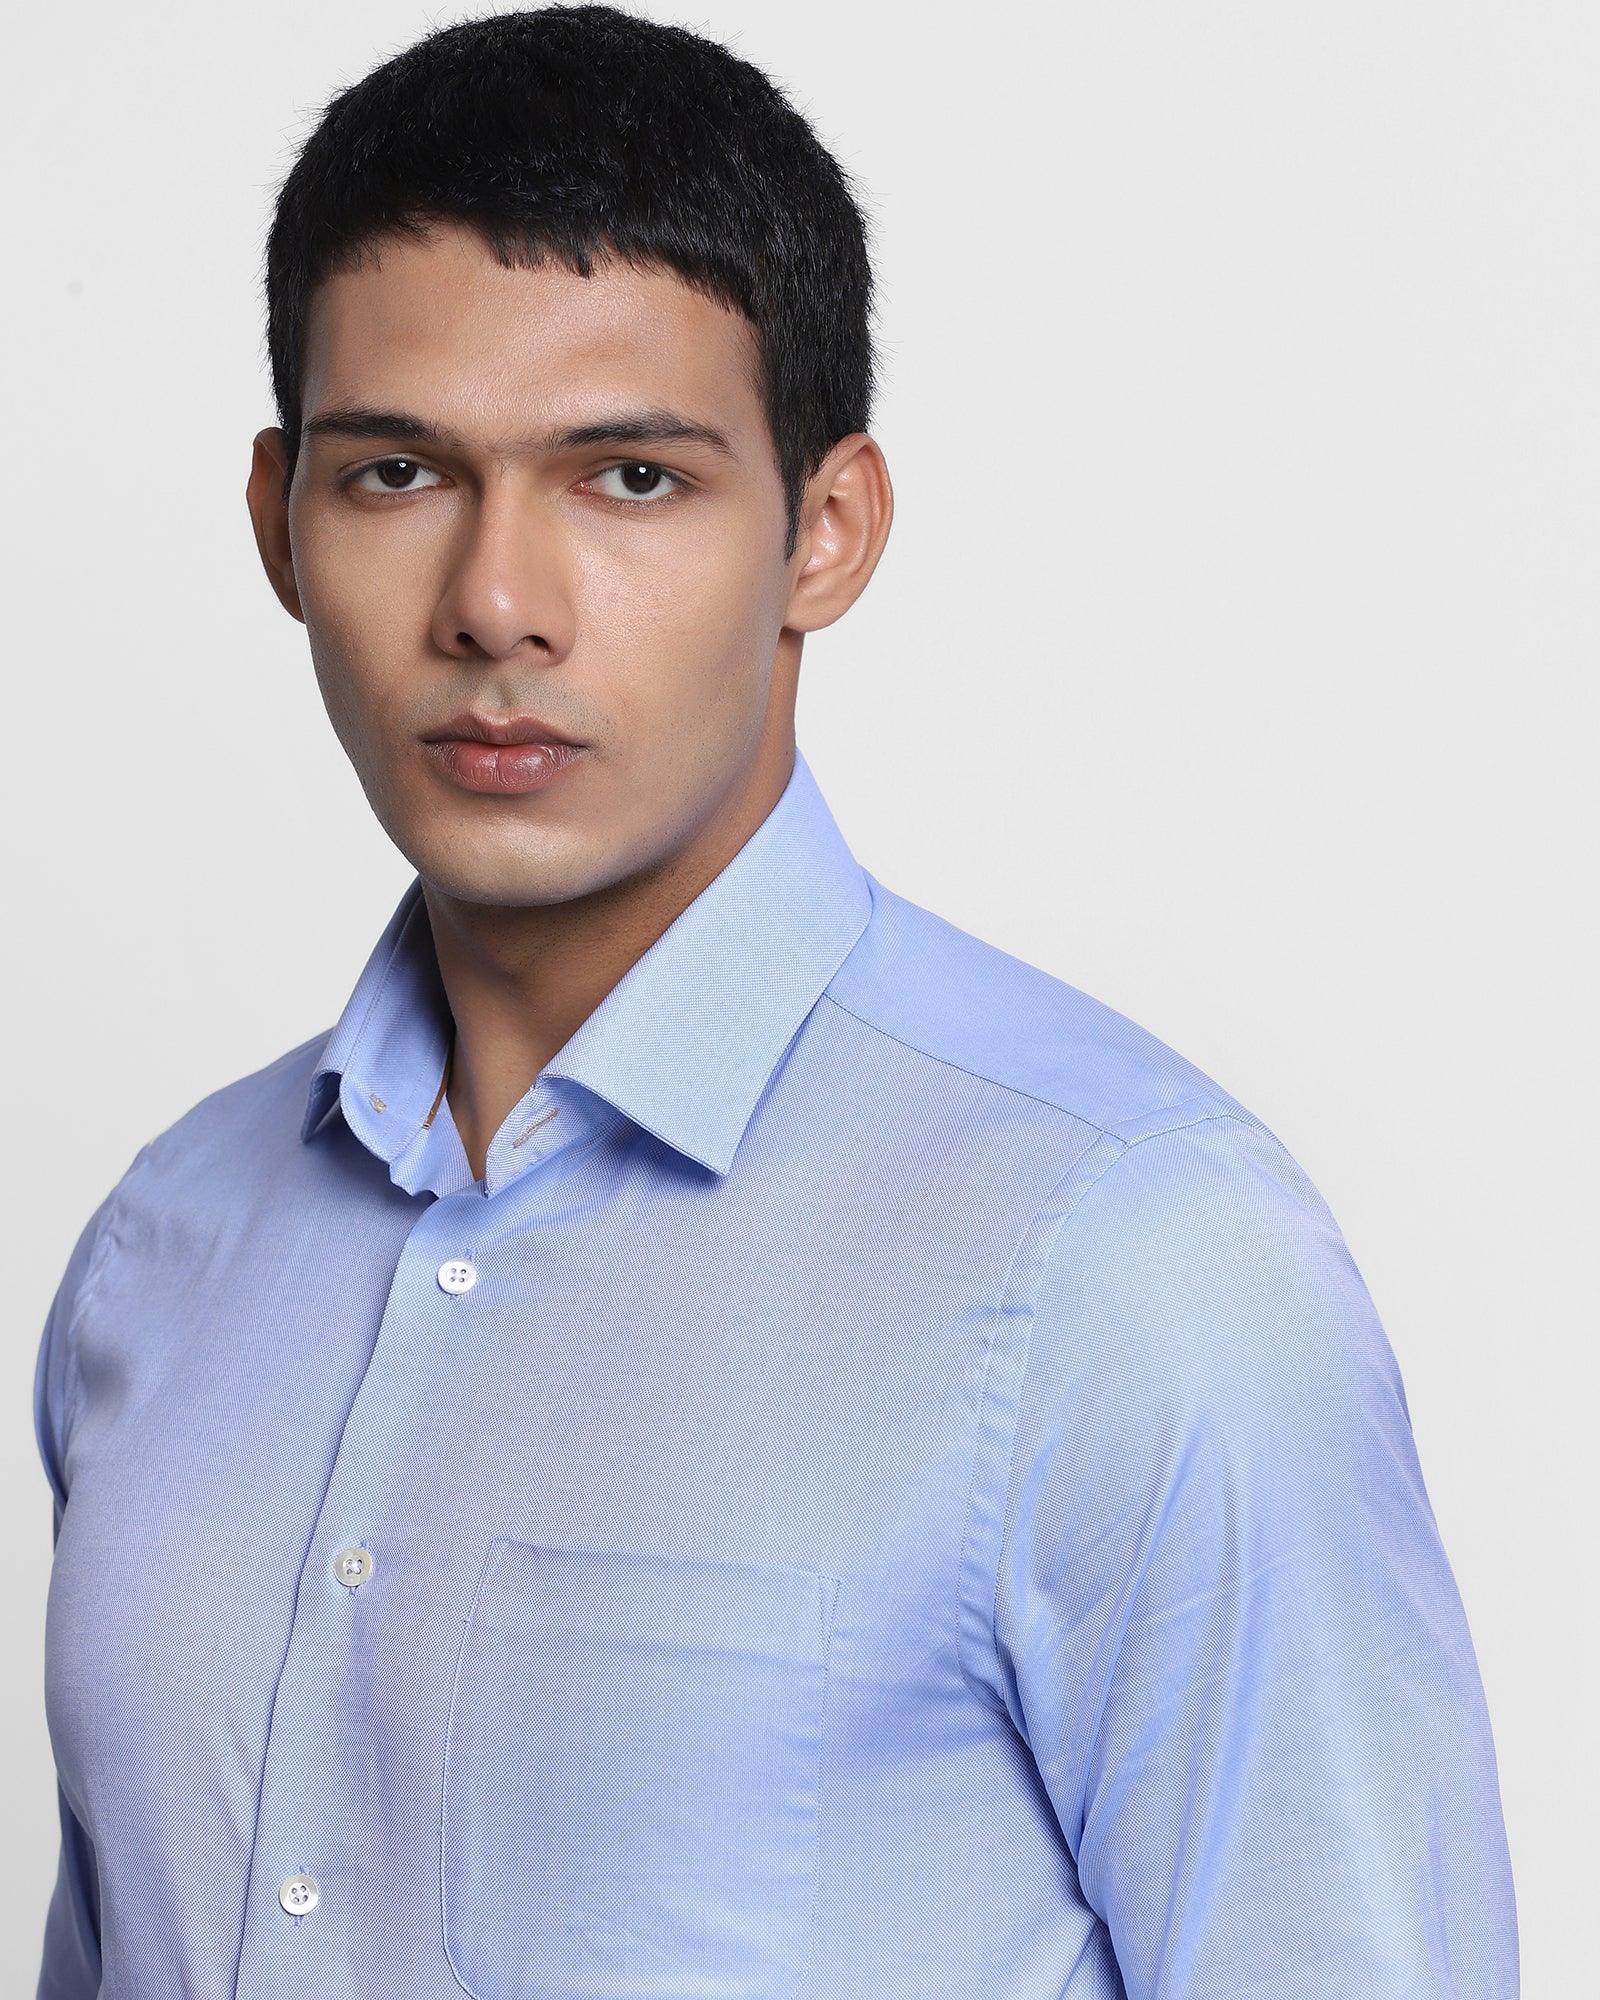 Luxe Formal Blue Textured Shirt - Anchor